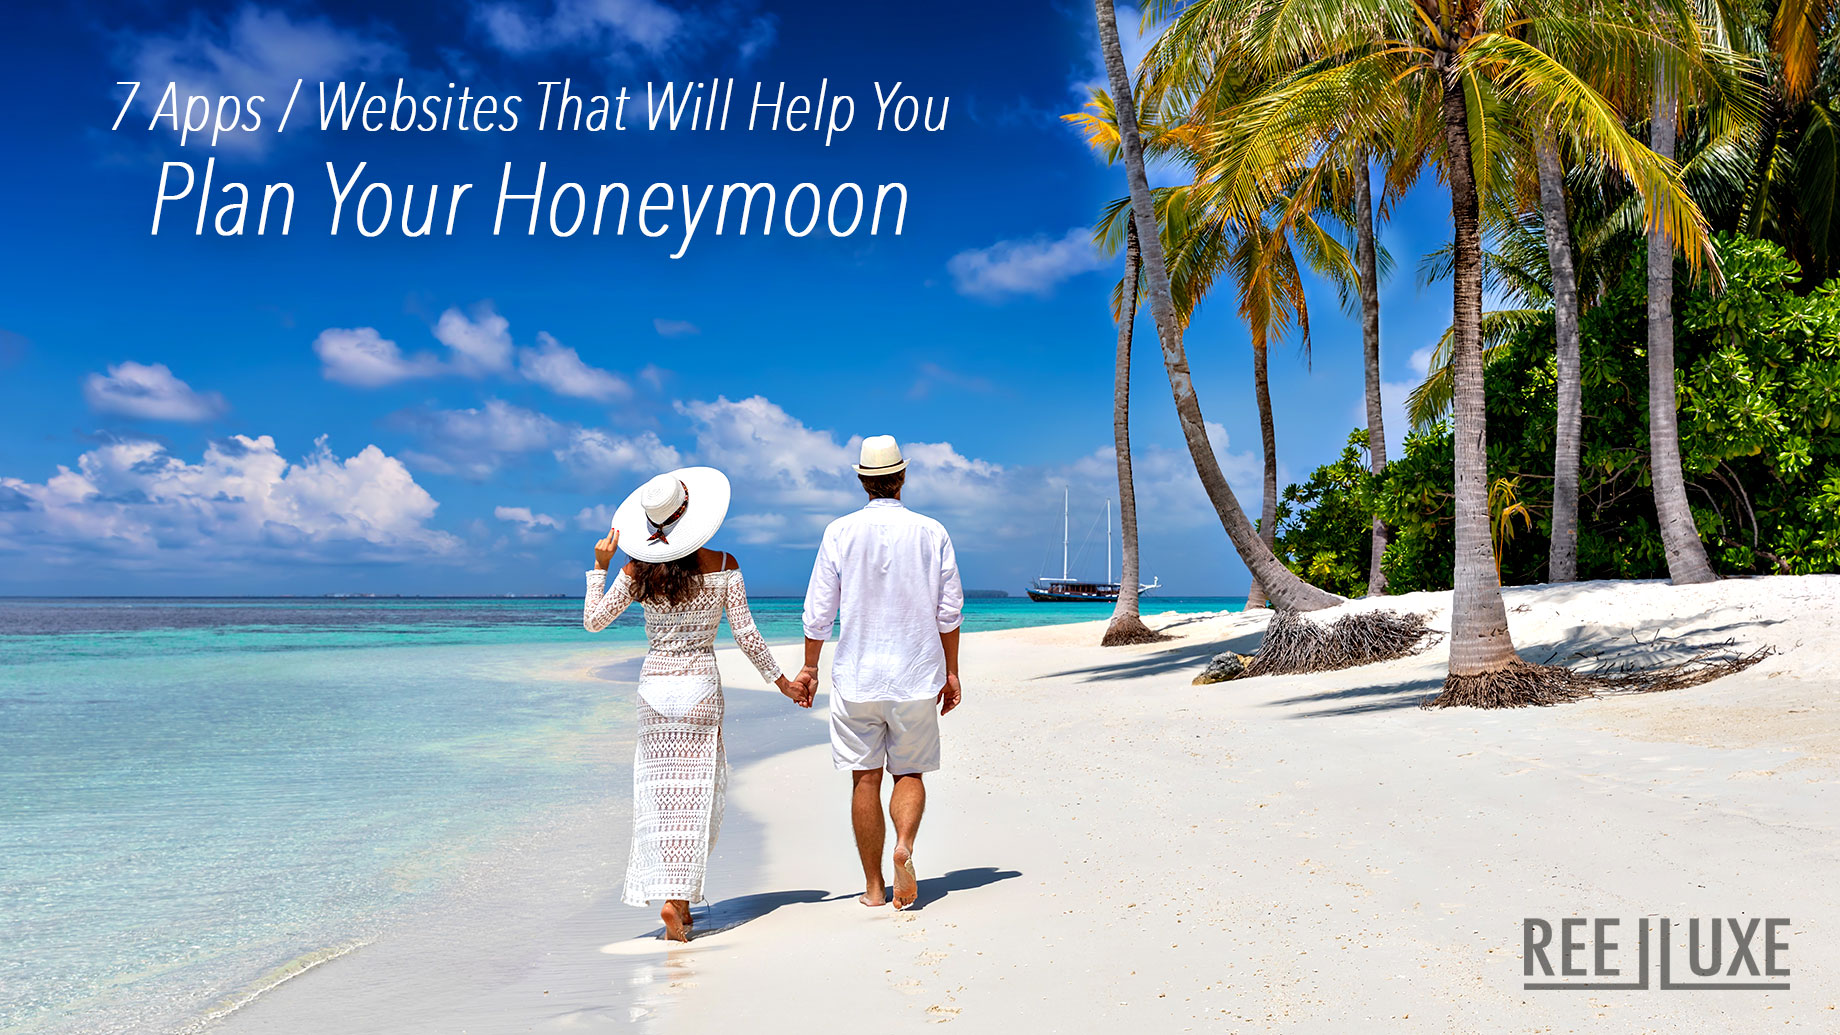 7 Apps / Websites That Will Help You Plan Your Honeymoon